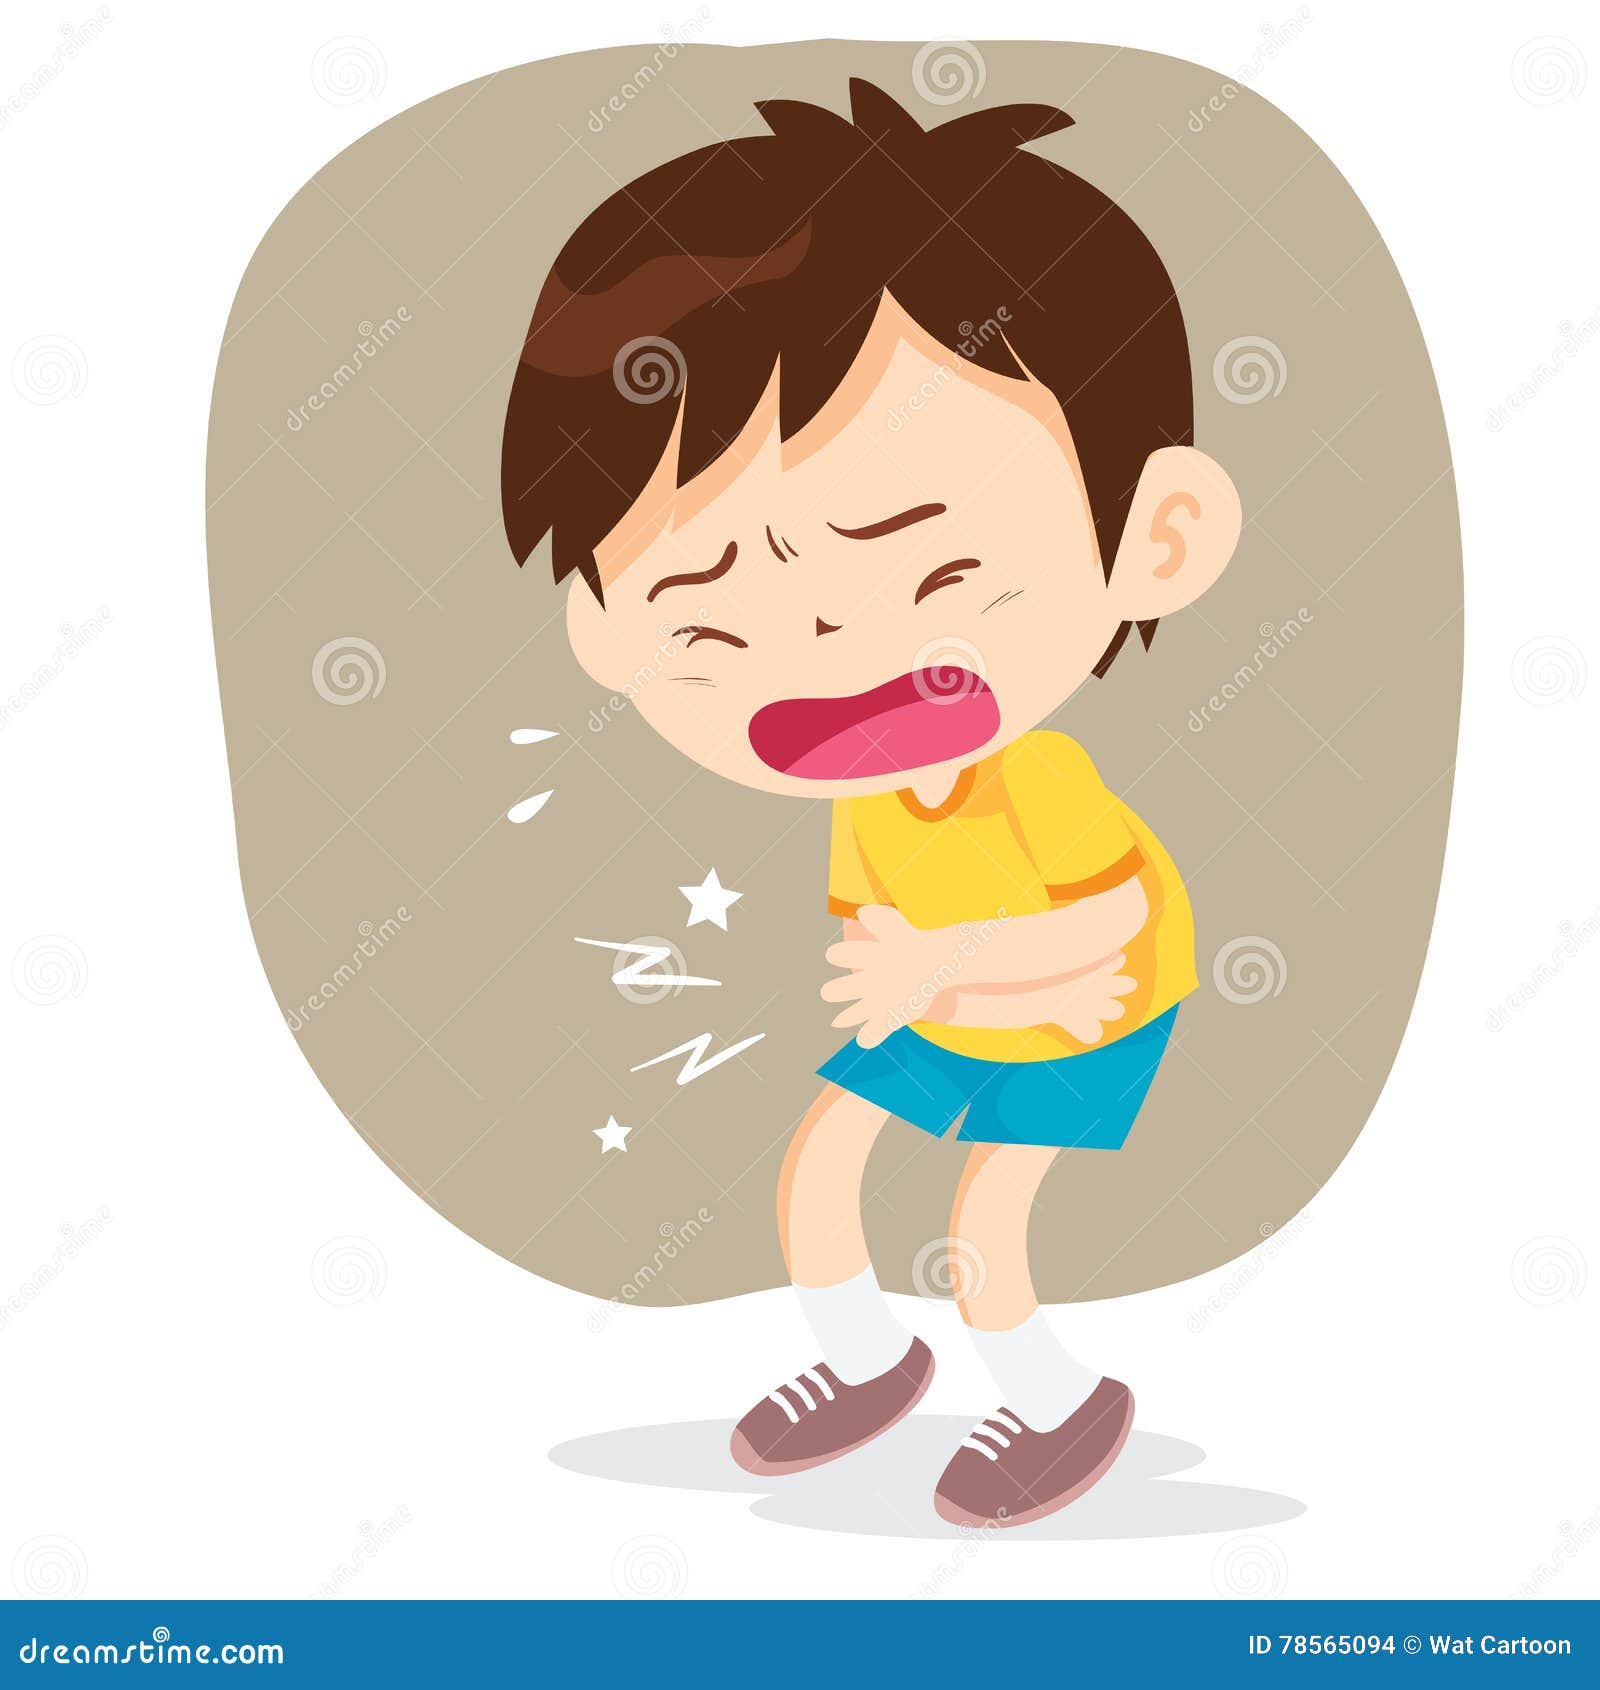 Boy have stomach ache stock vector. Illustration of diarrhea - 78565094